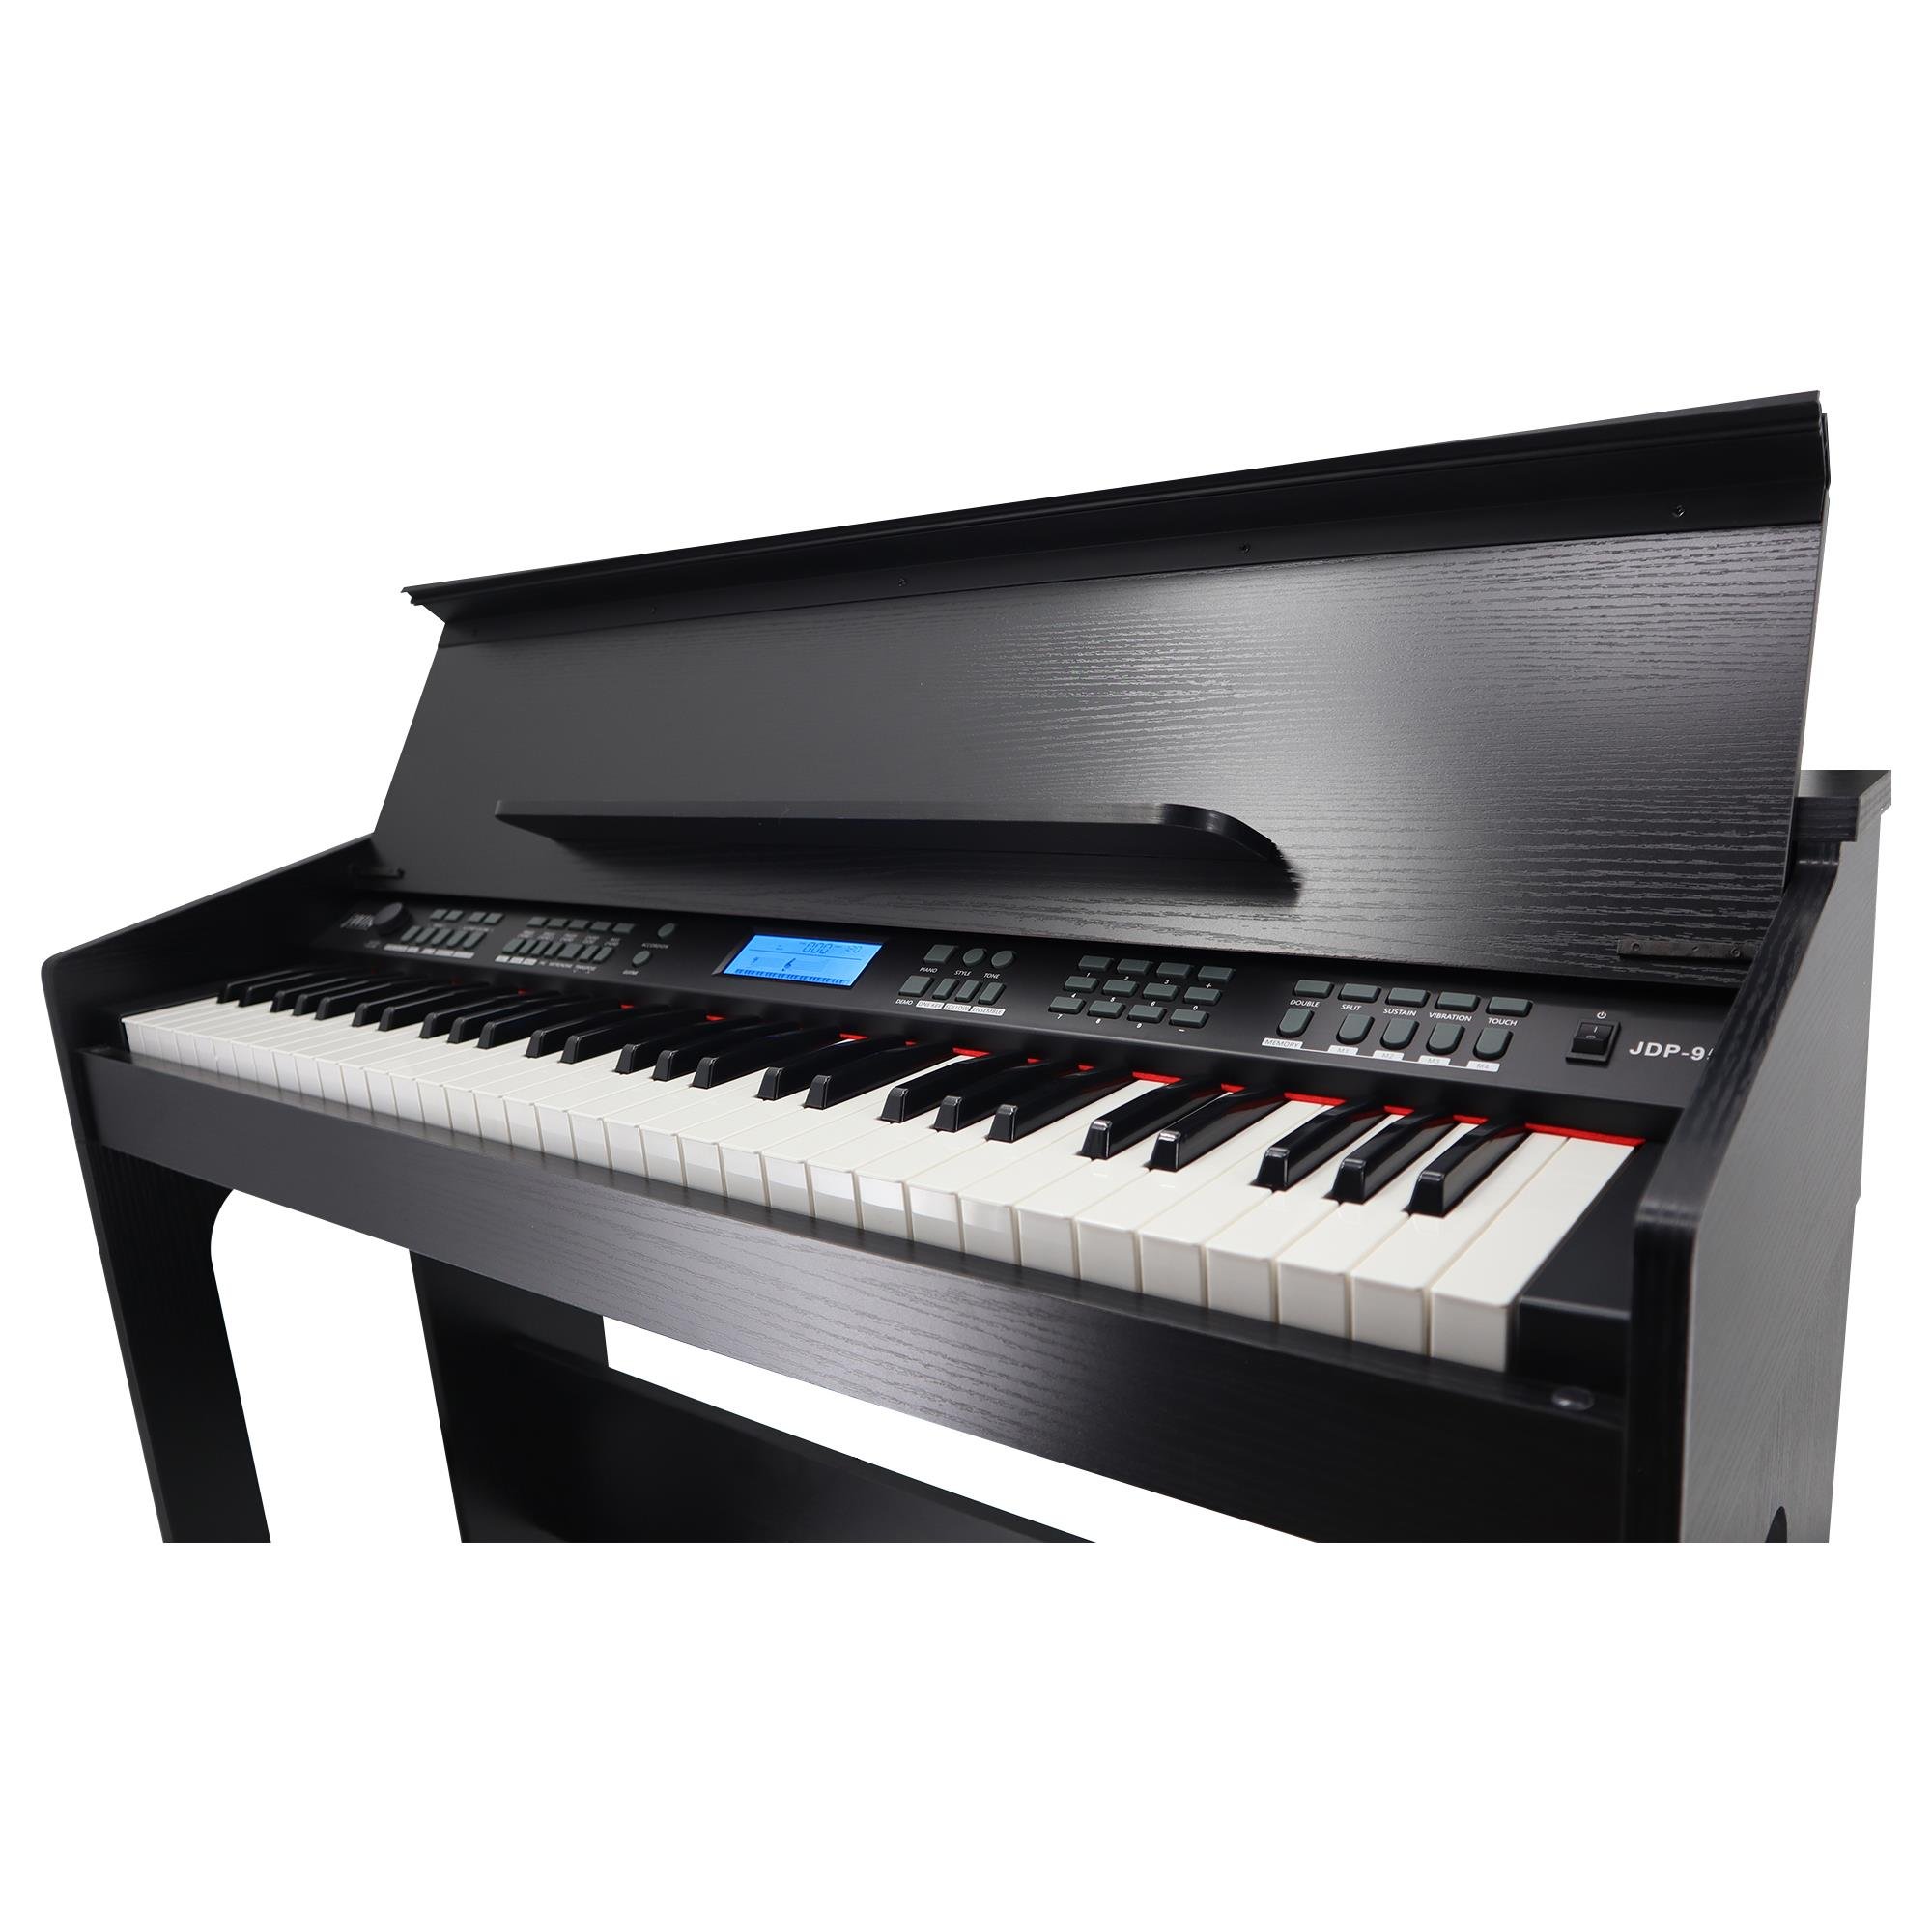 Jwin JDP-950 Tuş Hassasiyetli 61 Tuşlu Dijital Piyano - Siyah - Depodan  Kapıya